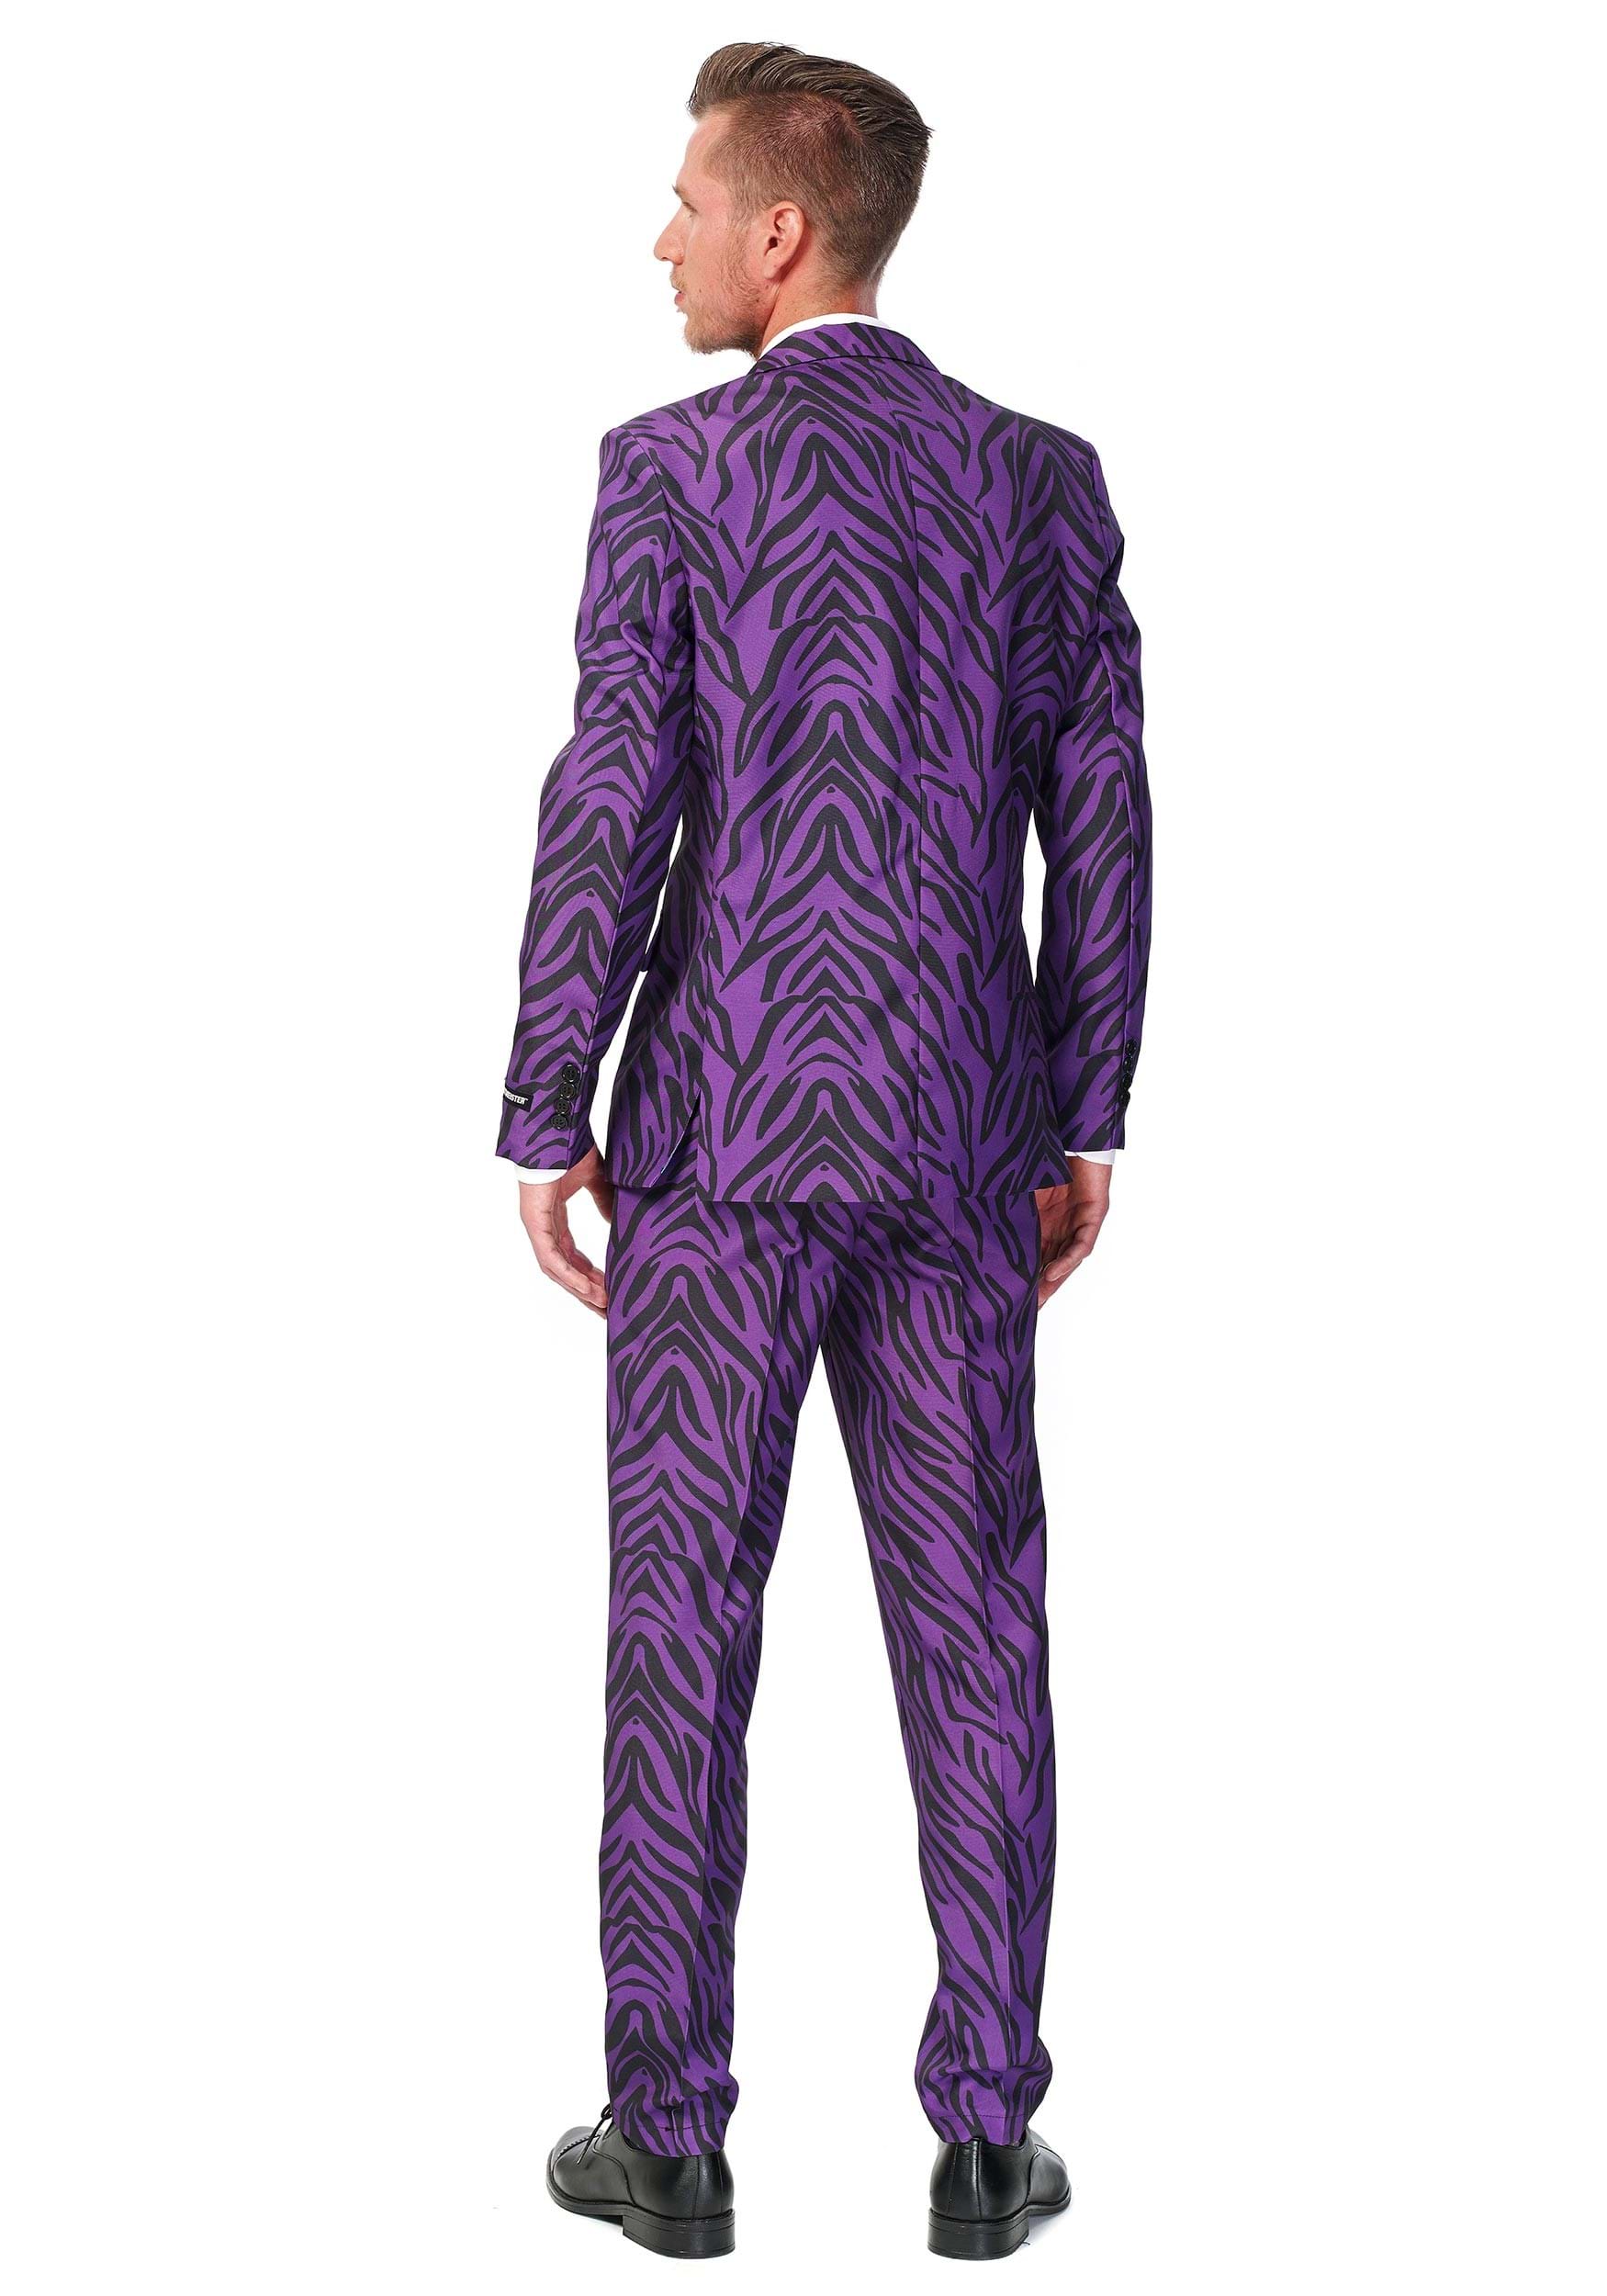 Suitmeister Basic Pimp Tiger Suit Fancy Dress Costume For Men